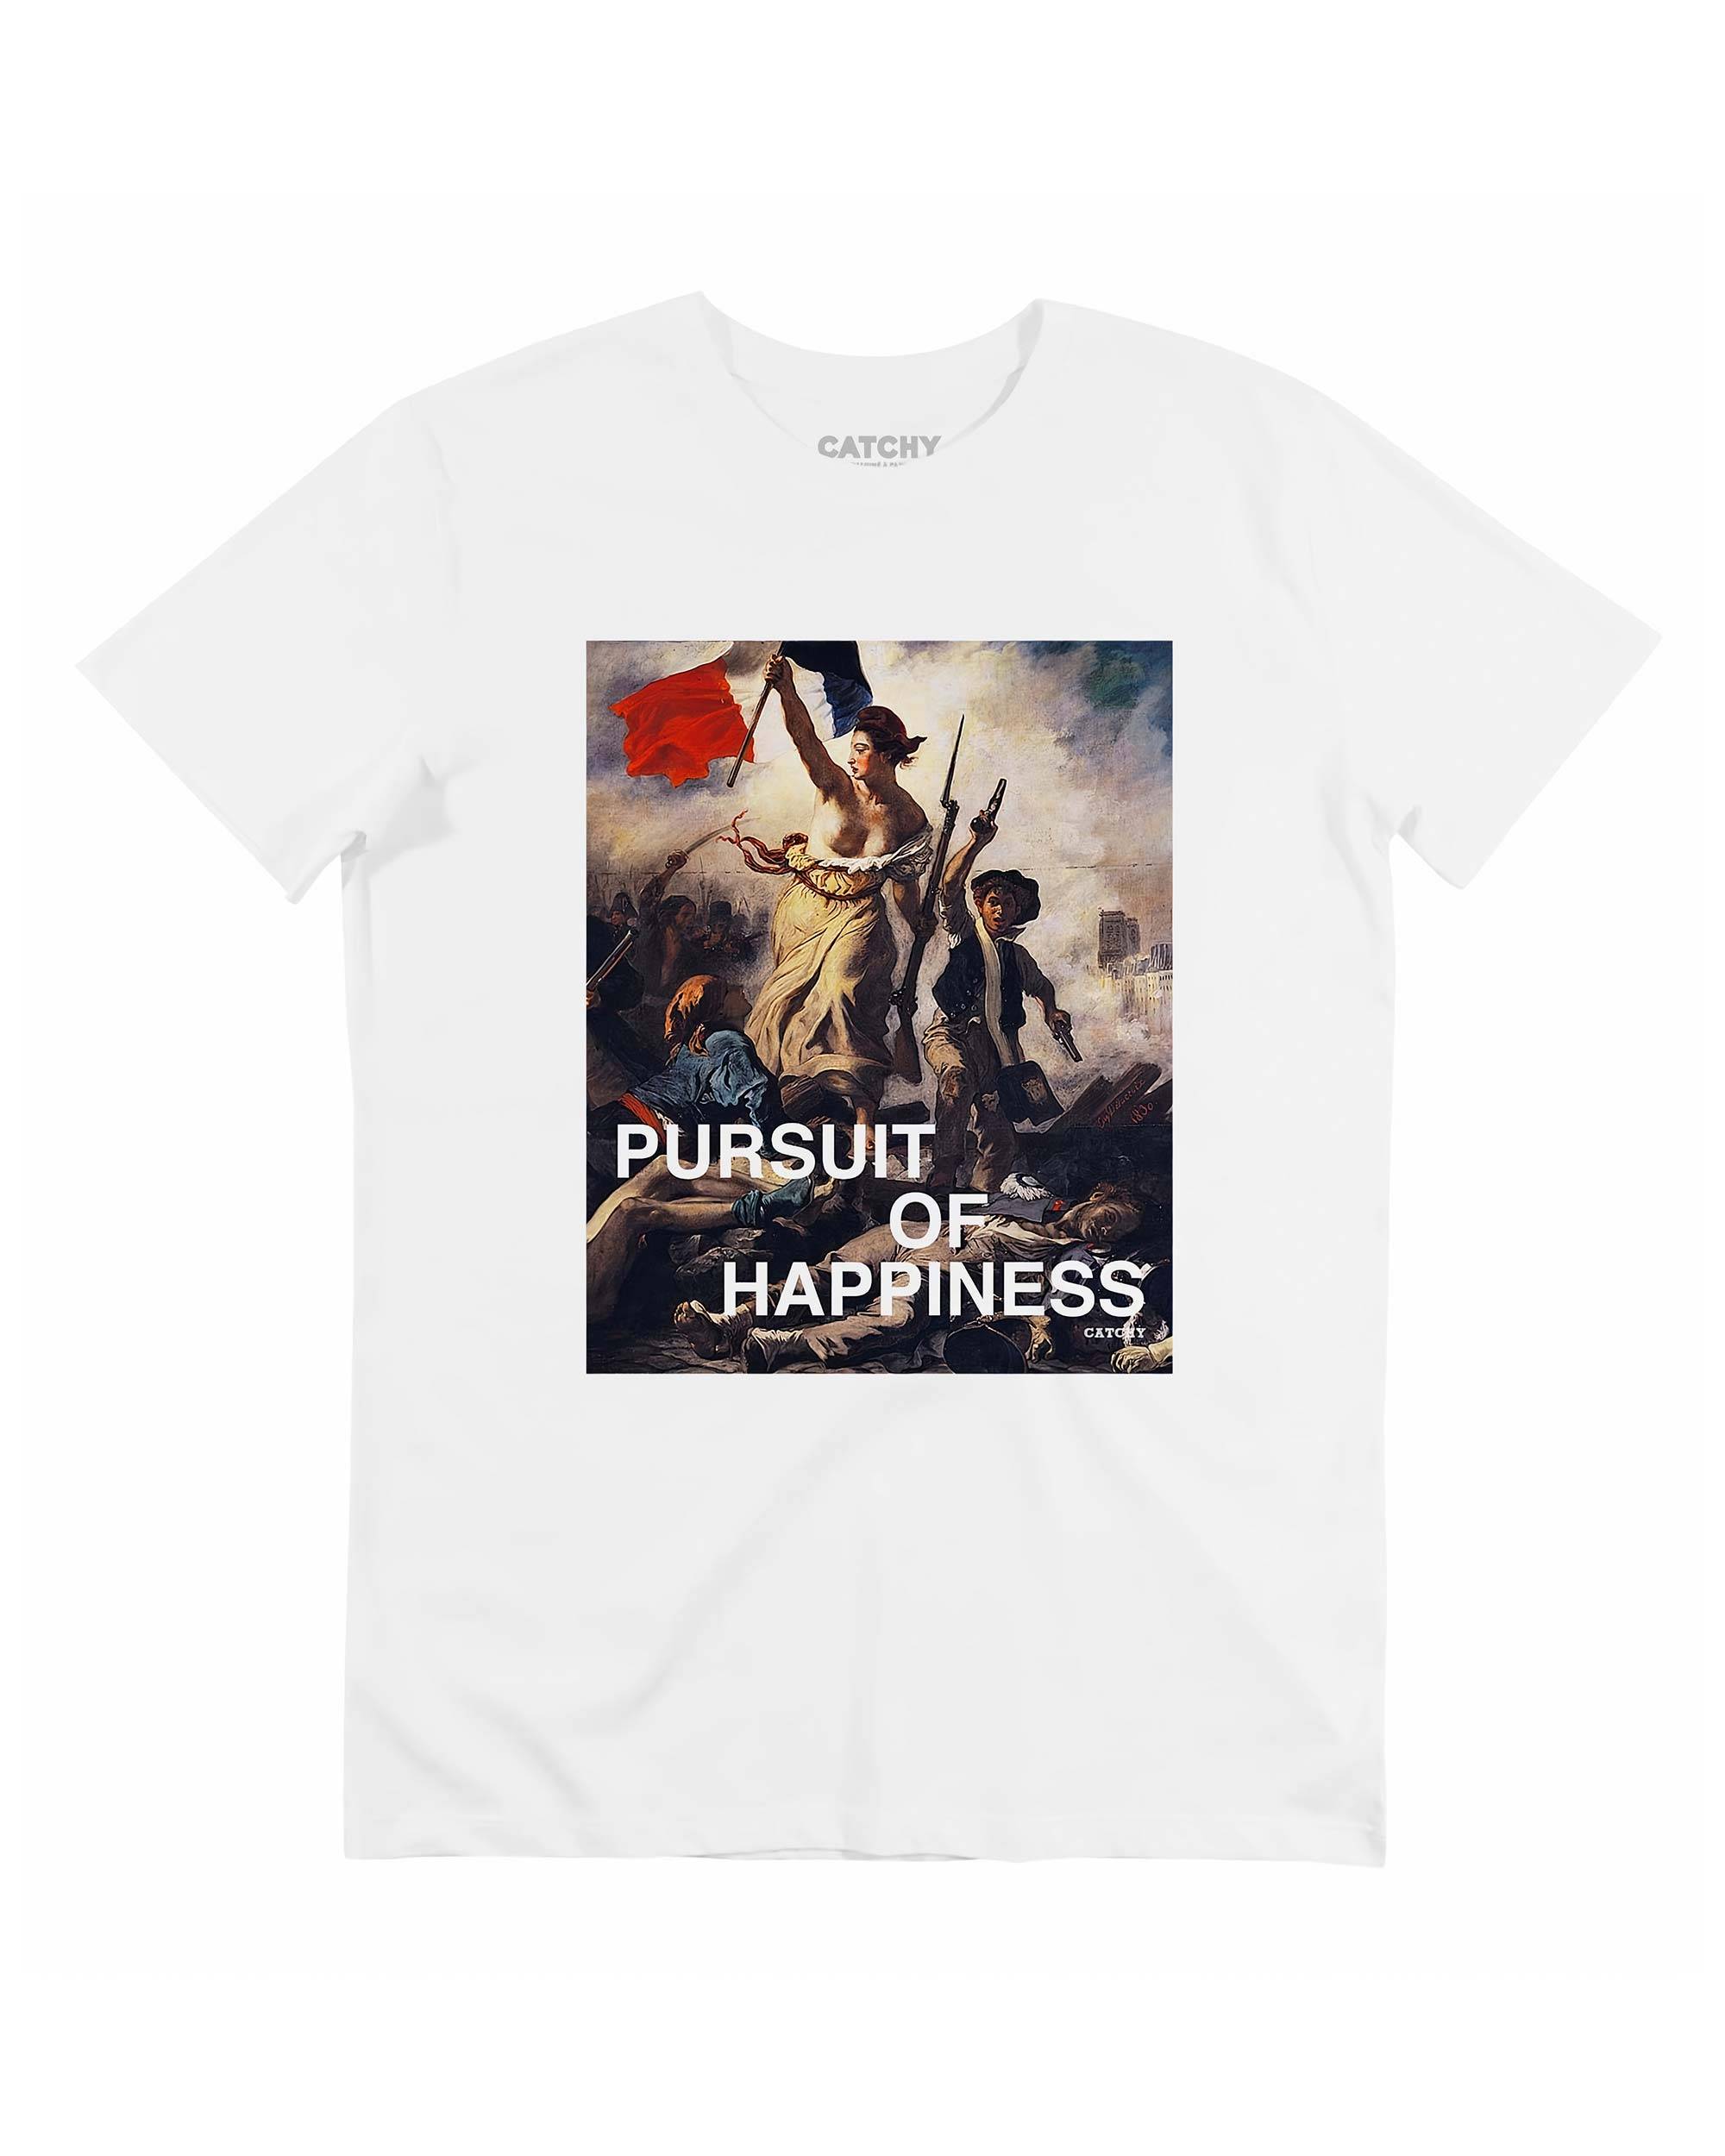 T-shirt Pursuit Of Happiness Grafitee